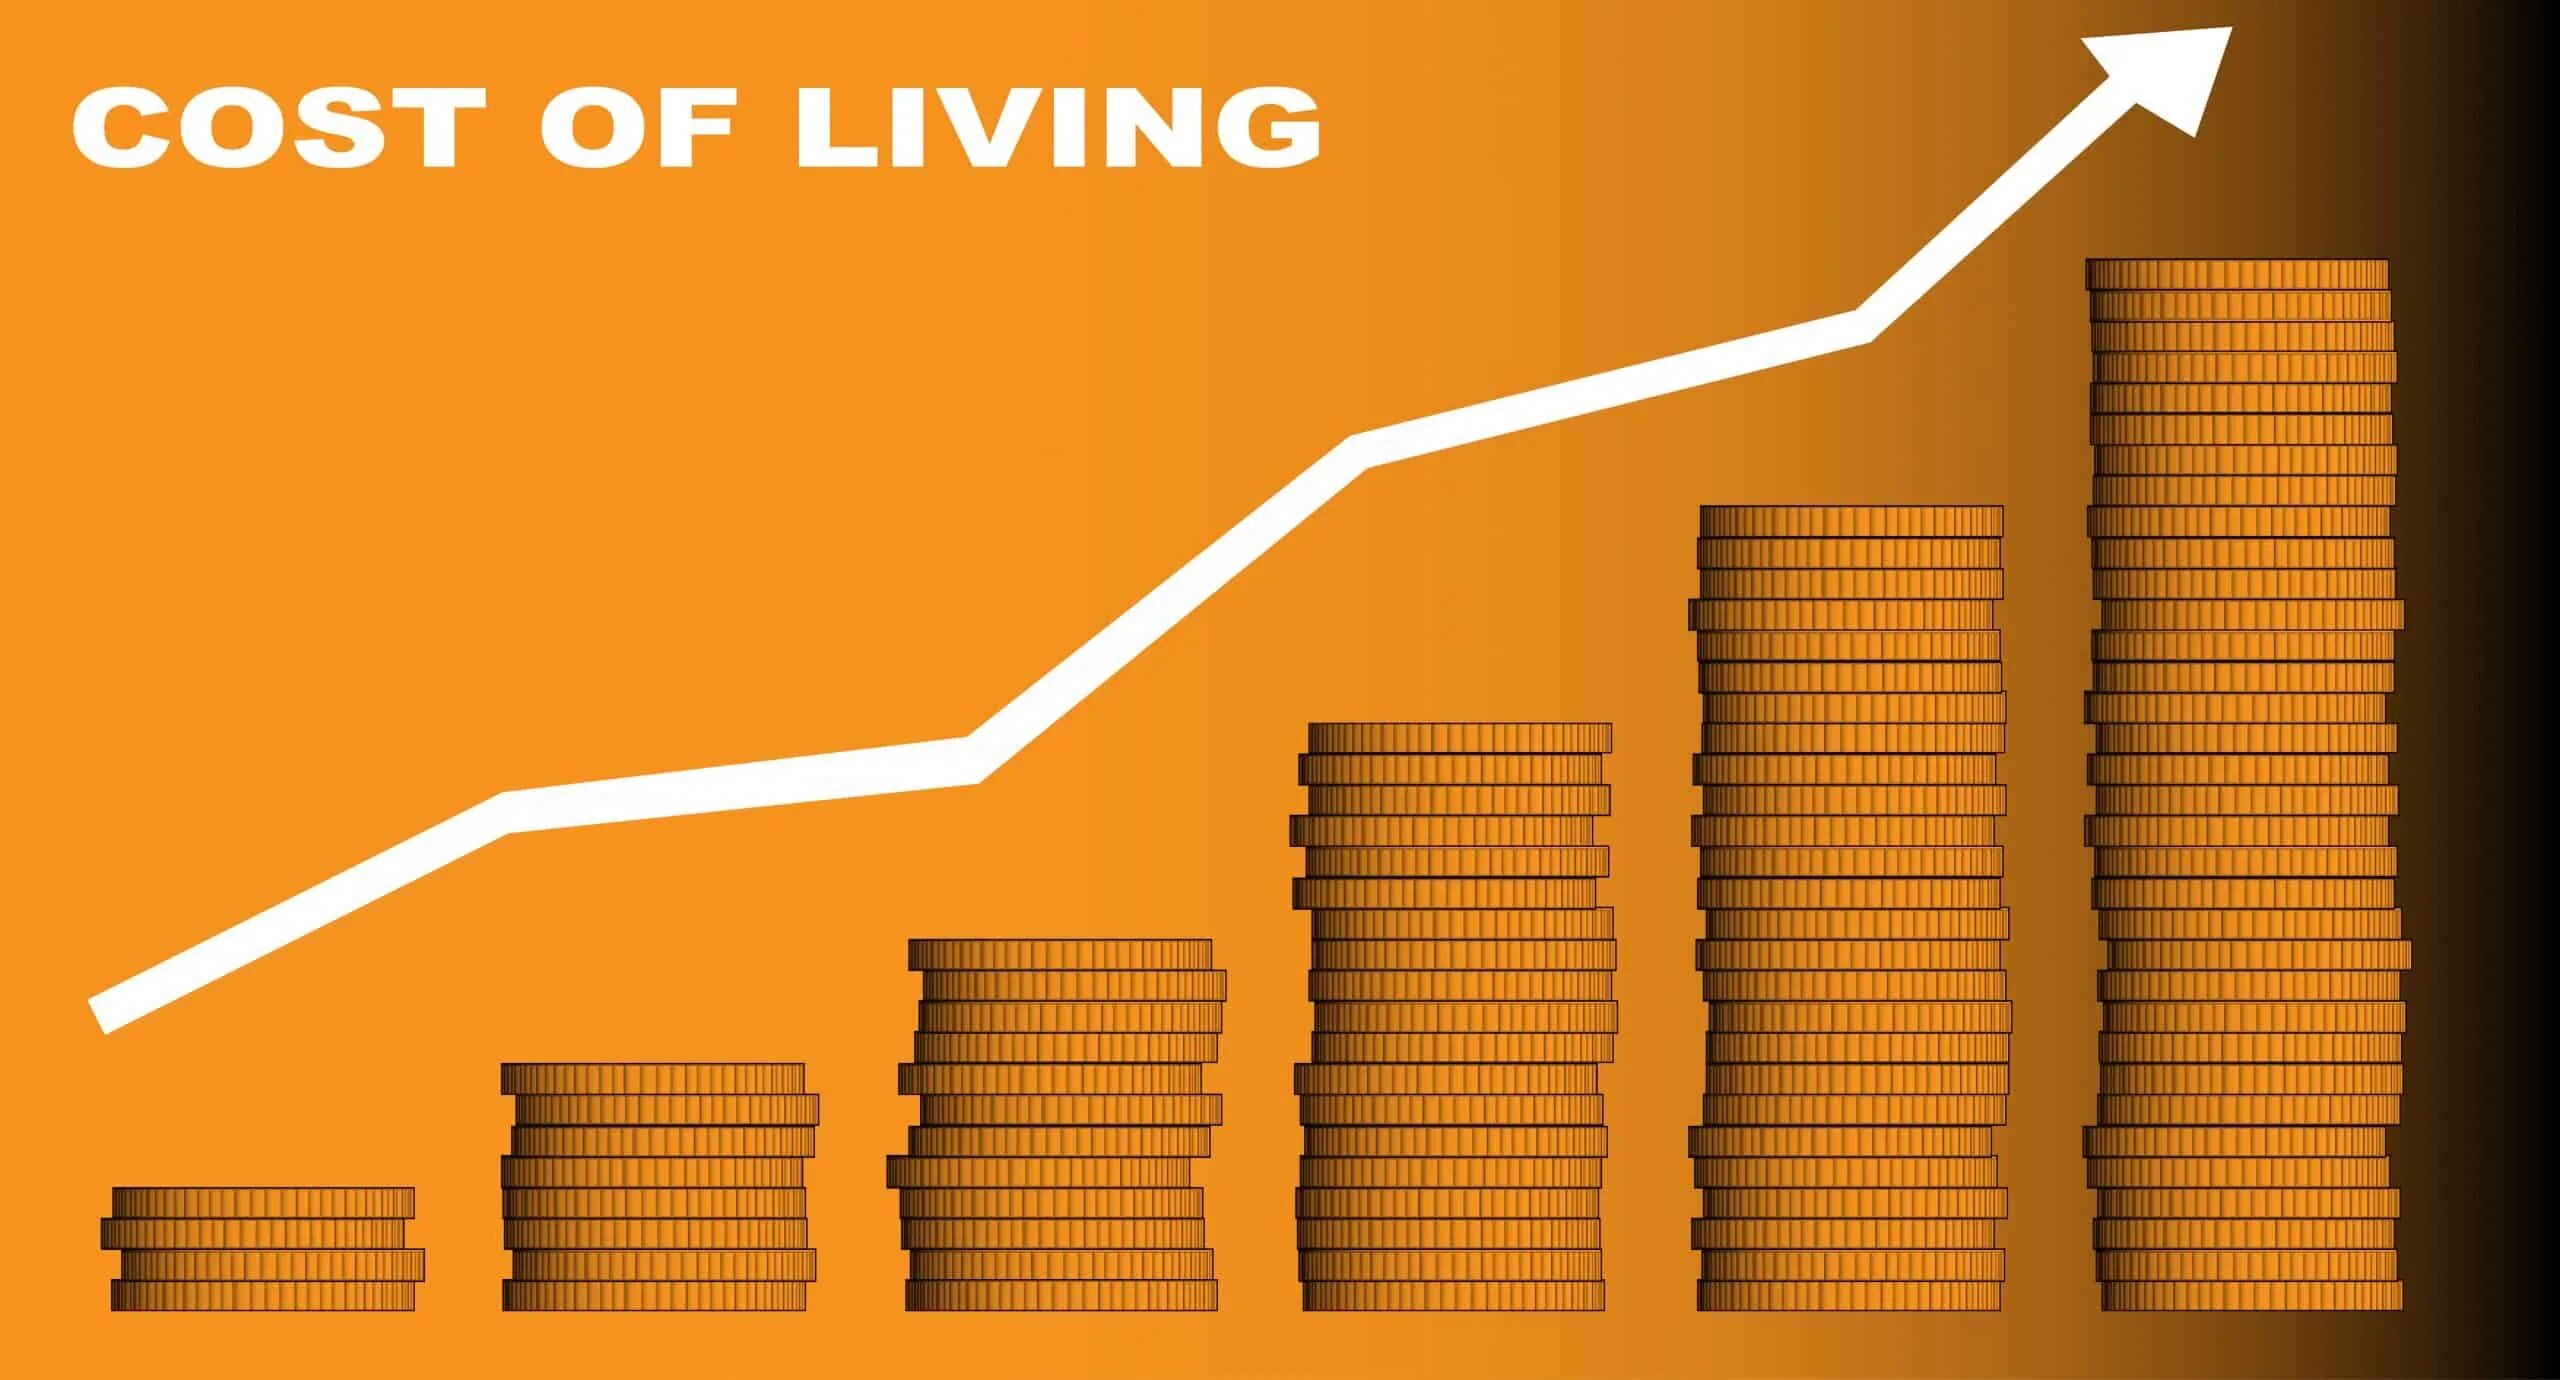 High cost living. High cost of Living картинка. Уровень жизни картинки. Уровень жизни стоковые фото. Экономика и уровень жизни картинки.